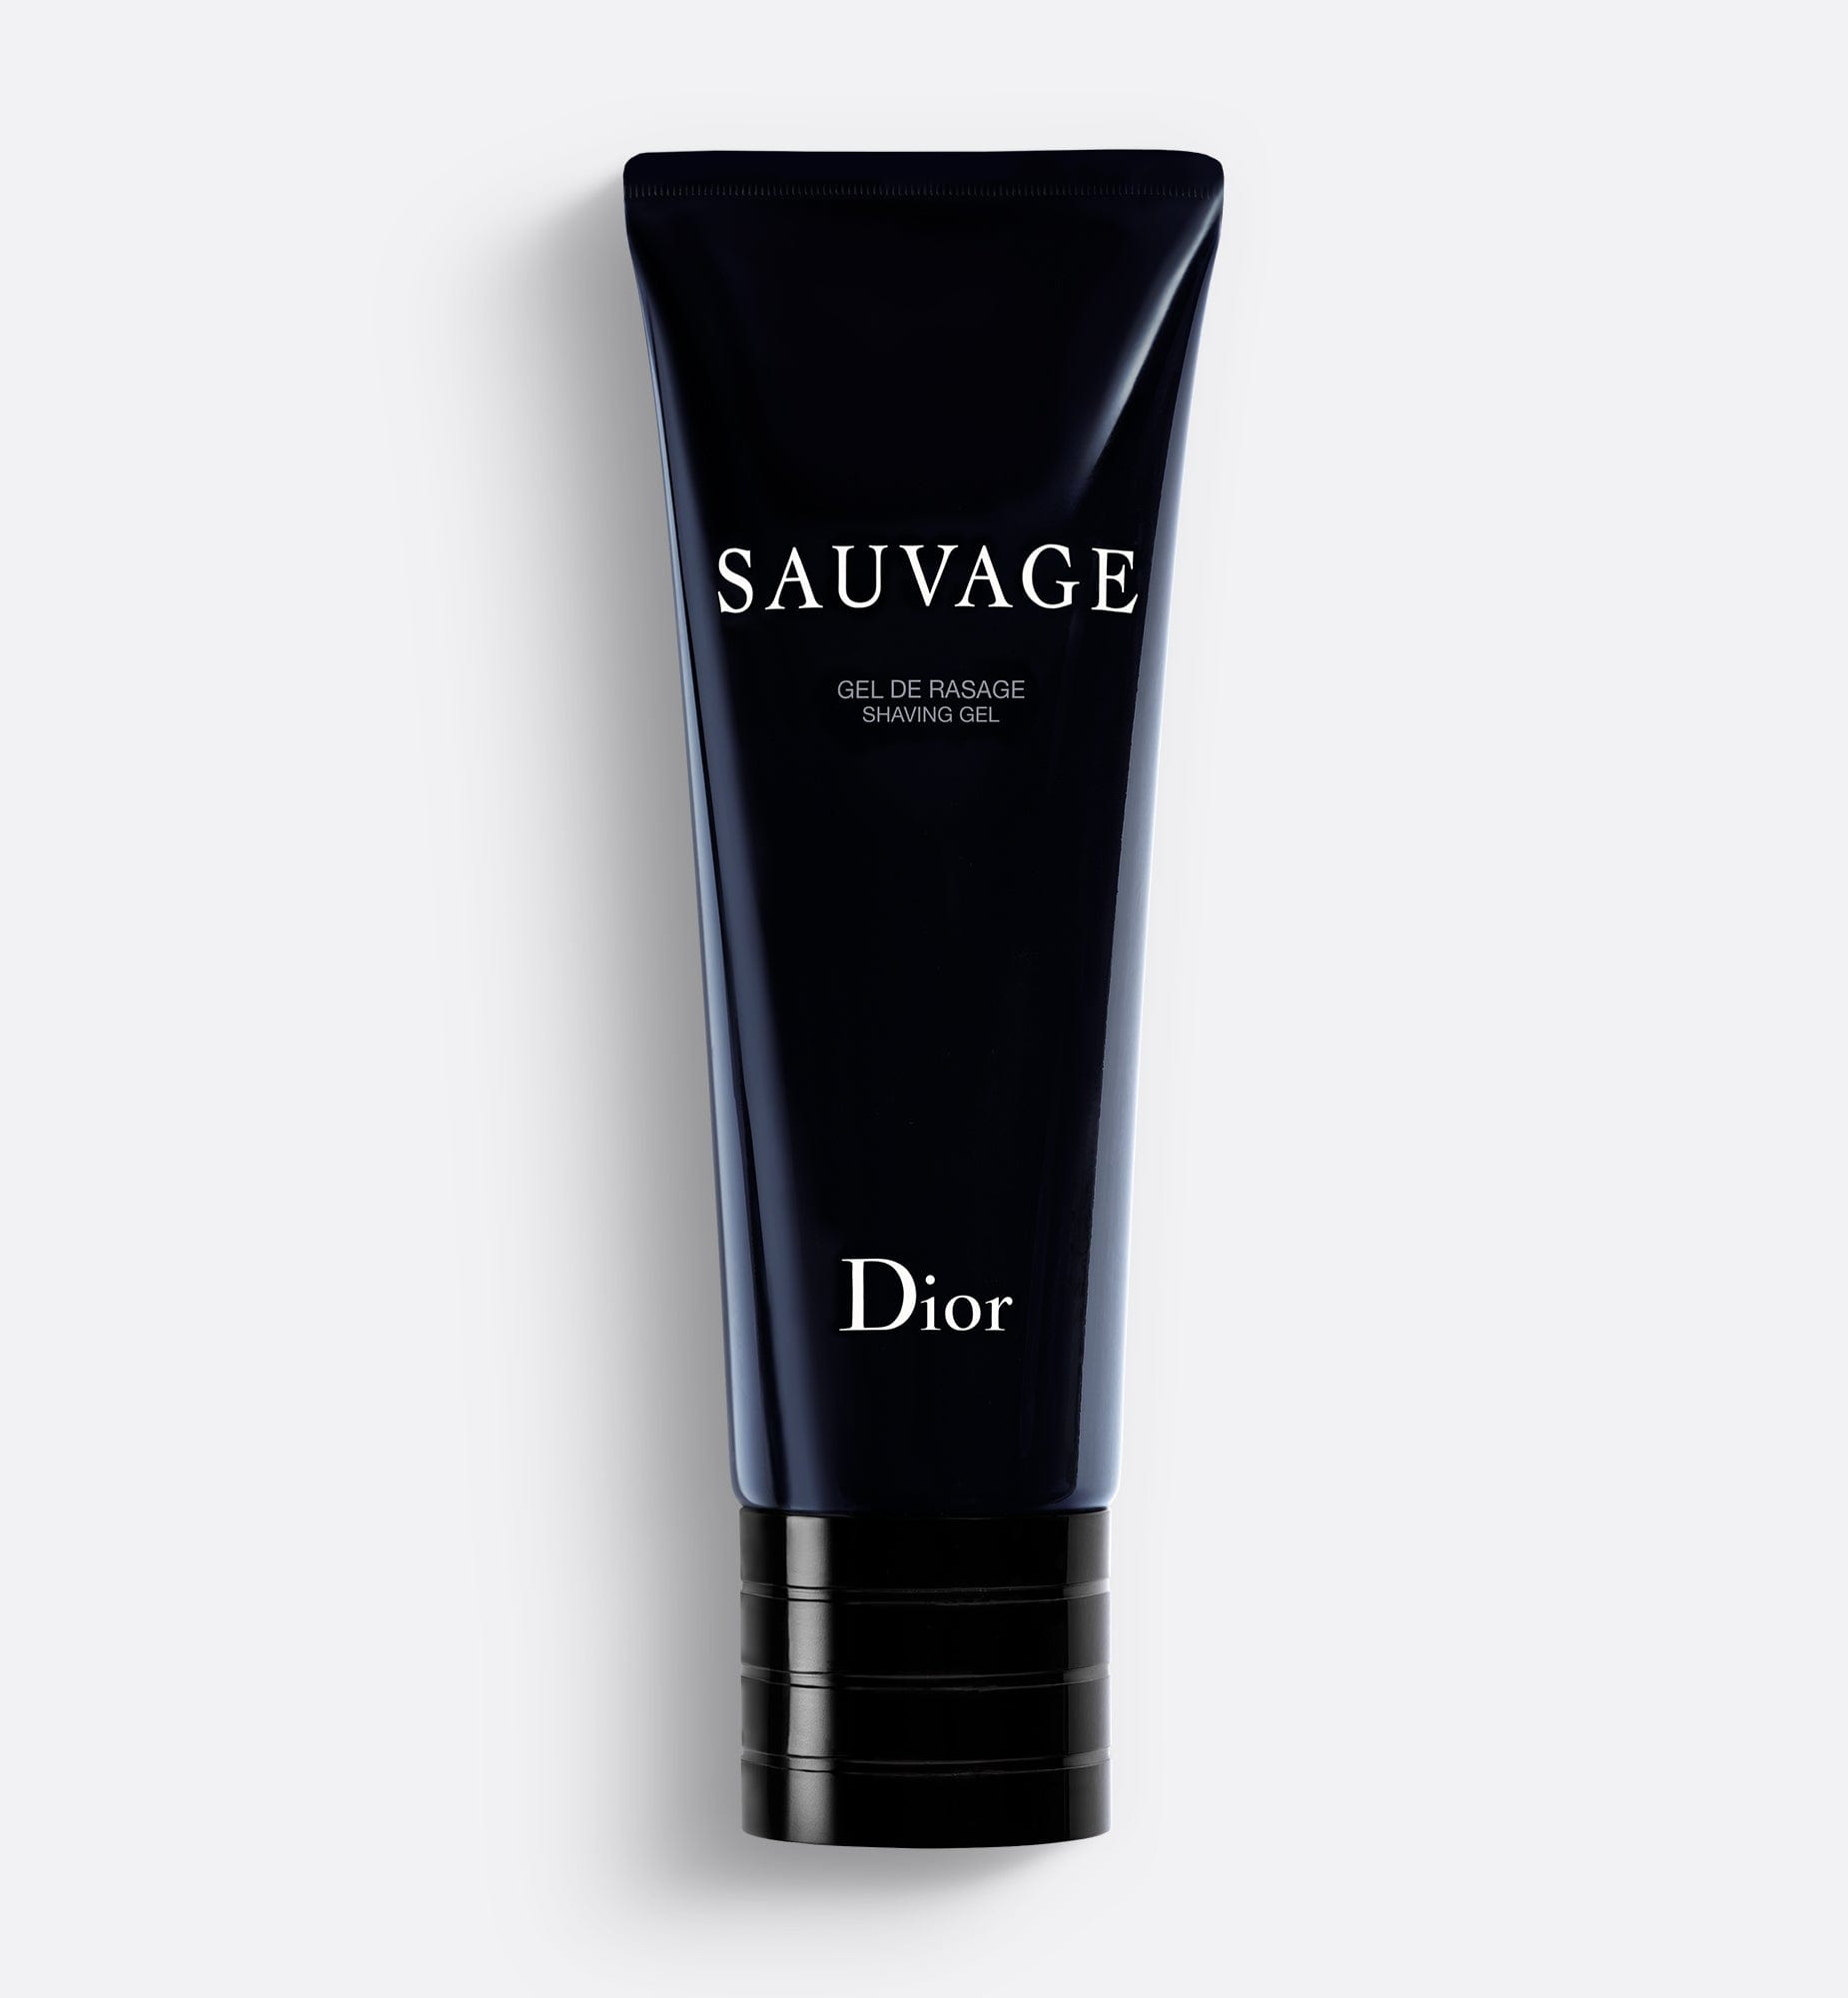 Sauvage Shaving Gel | Shaving Gel - Helps Protect Skin from Irritation